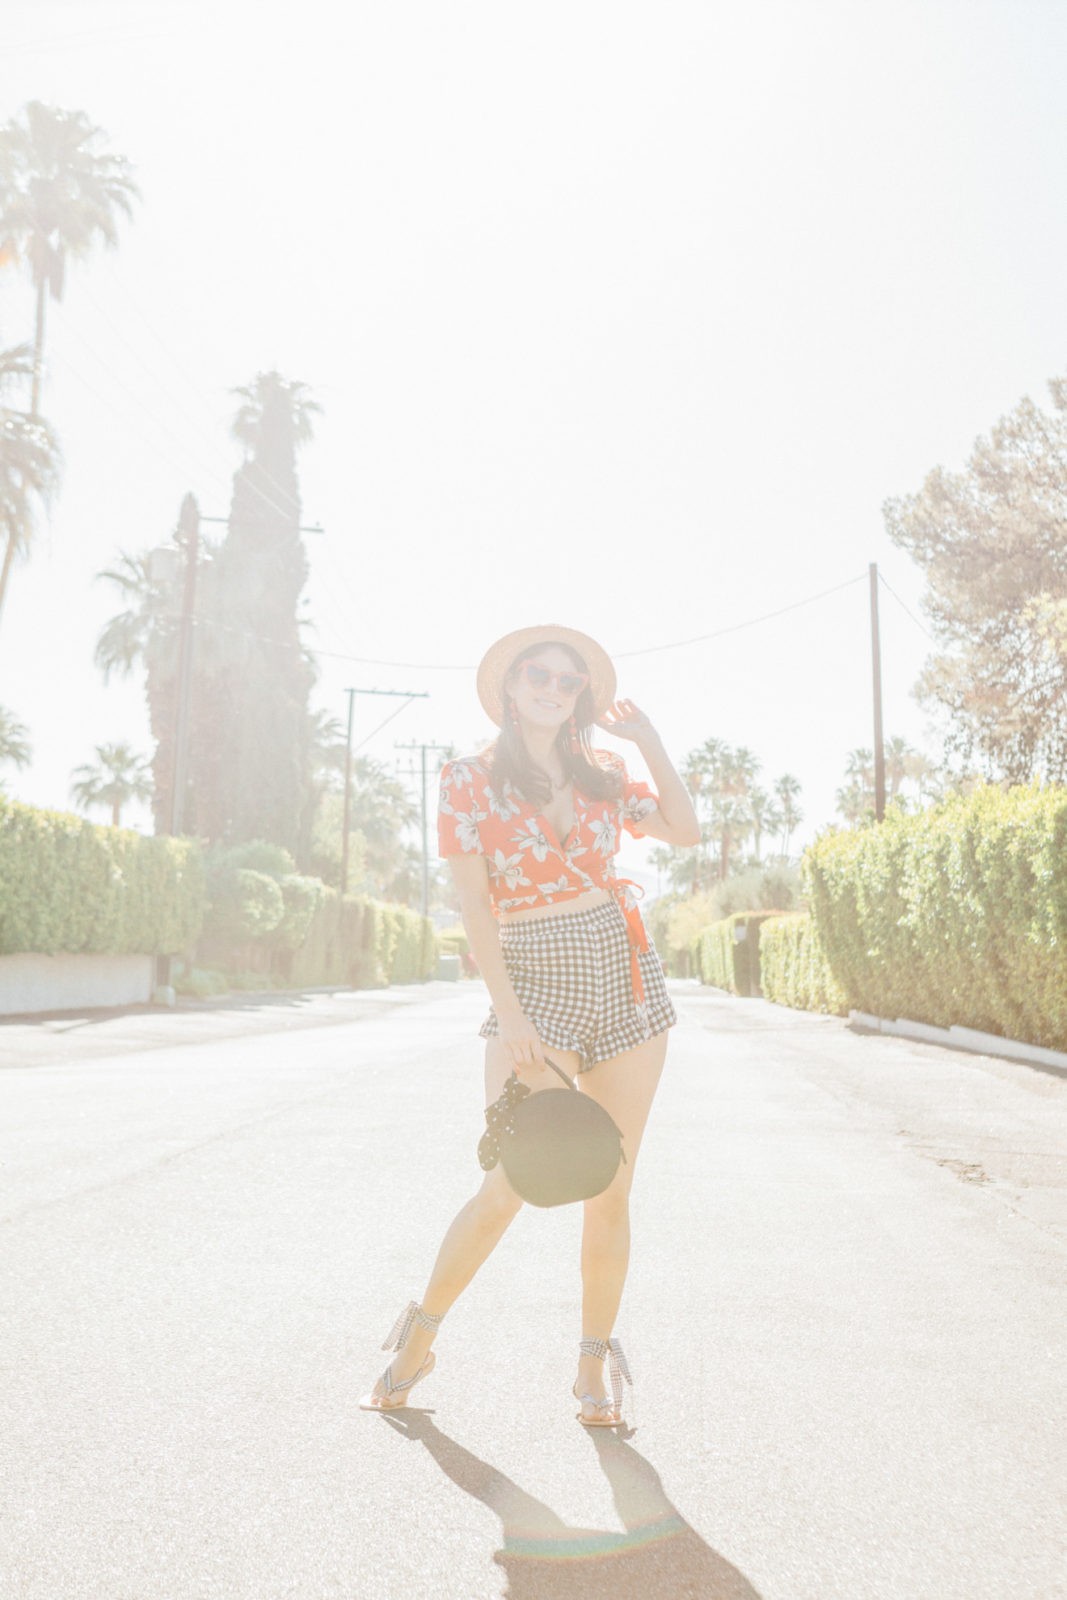 Summer Bucket List by Popular Los Angeles Blogger Laura Lily